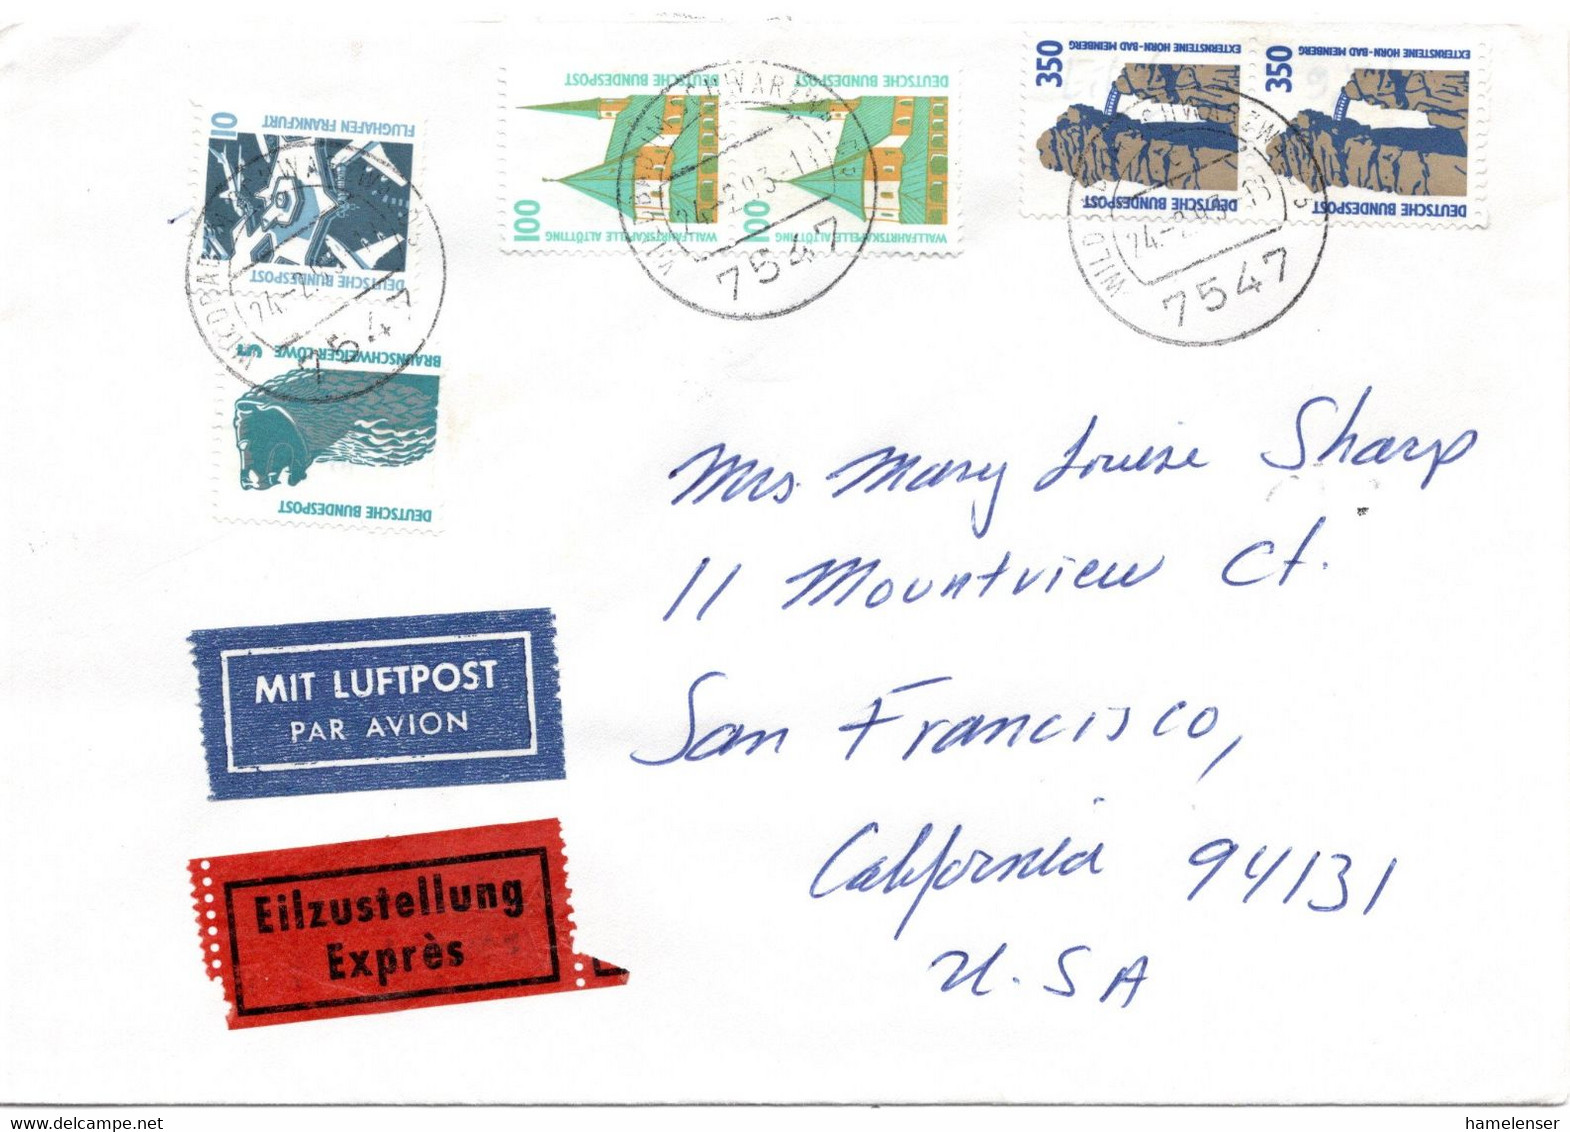 59890 - Bund - 1993 - 2@350Pfg SWK MiF A LpEilBf WILDBAD -> SAN FRANCISCO, CA (USA) - Covers & Documents